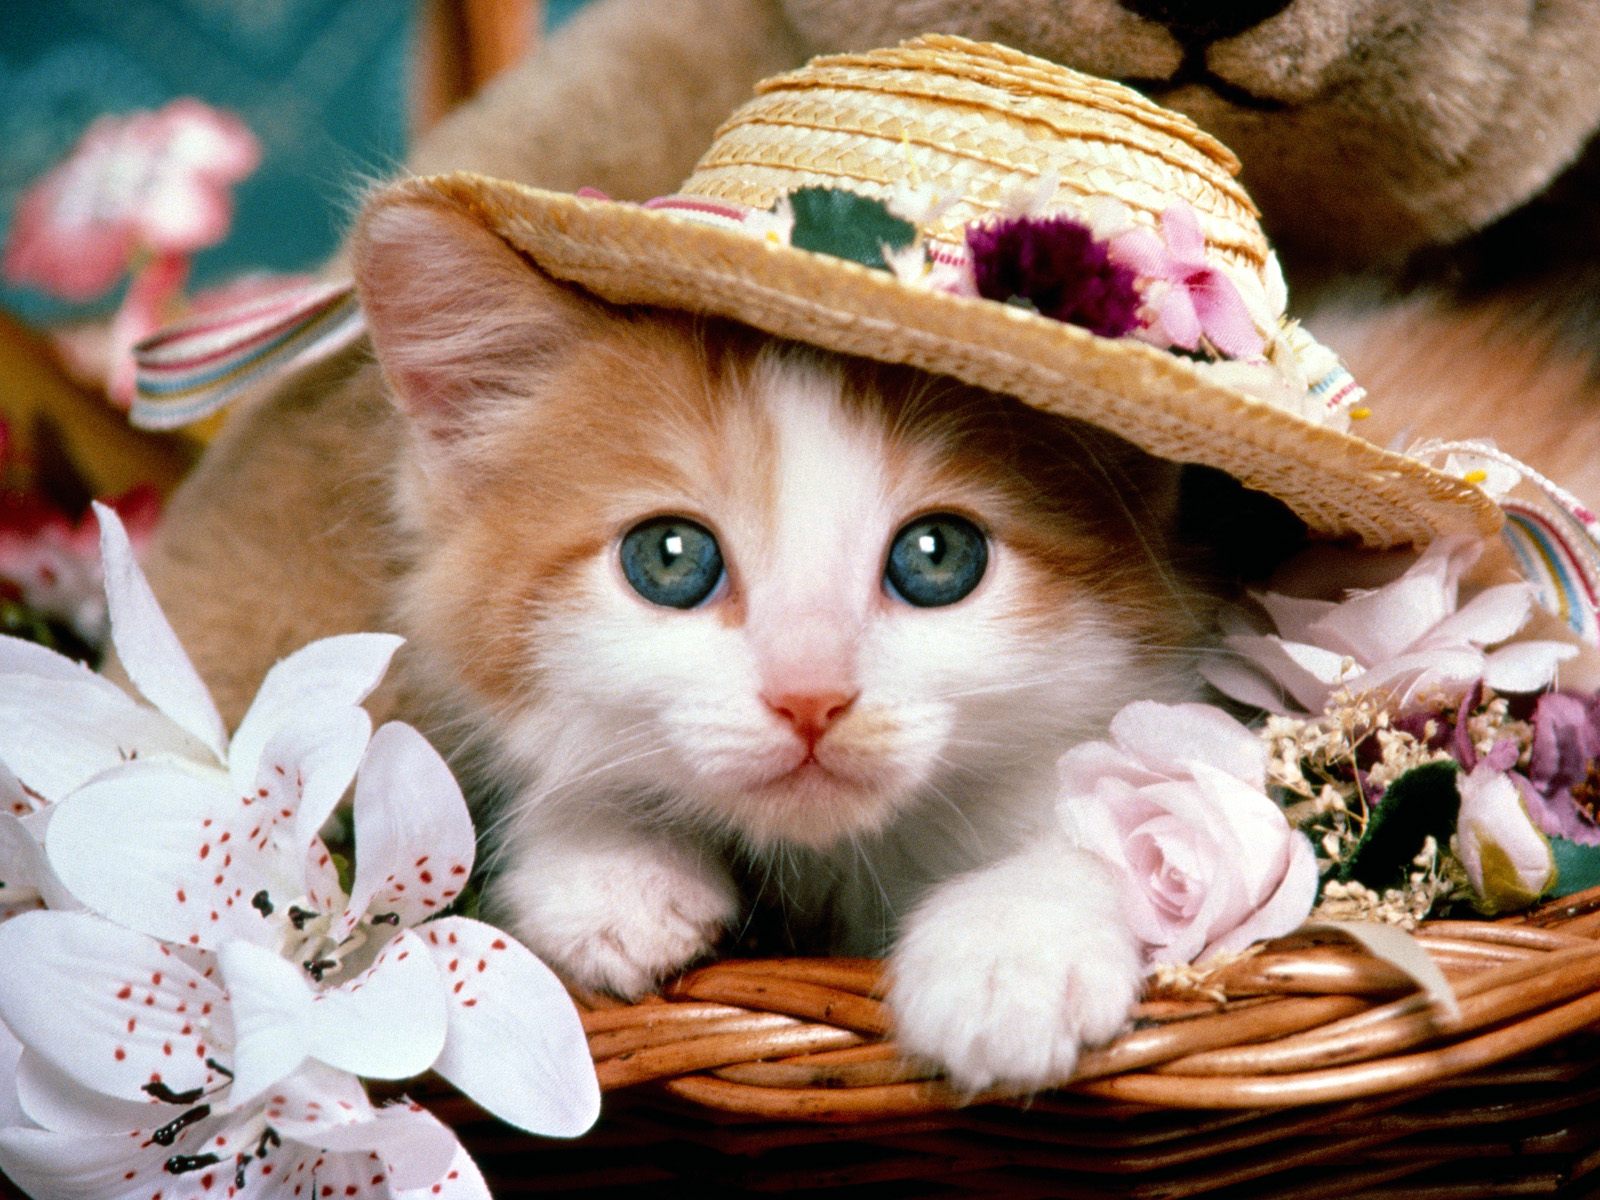 Cute cat wearing a hat.